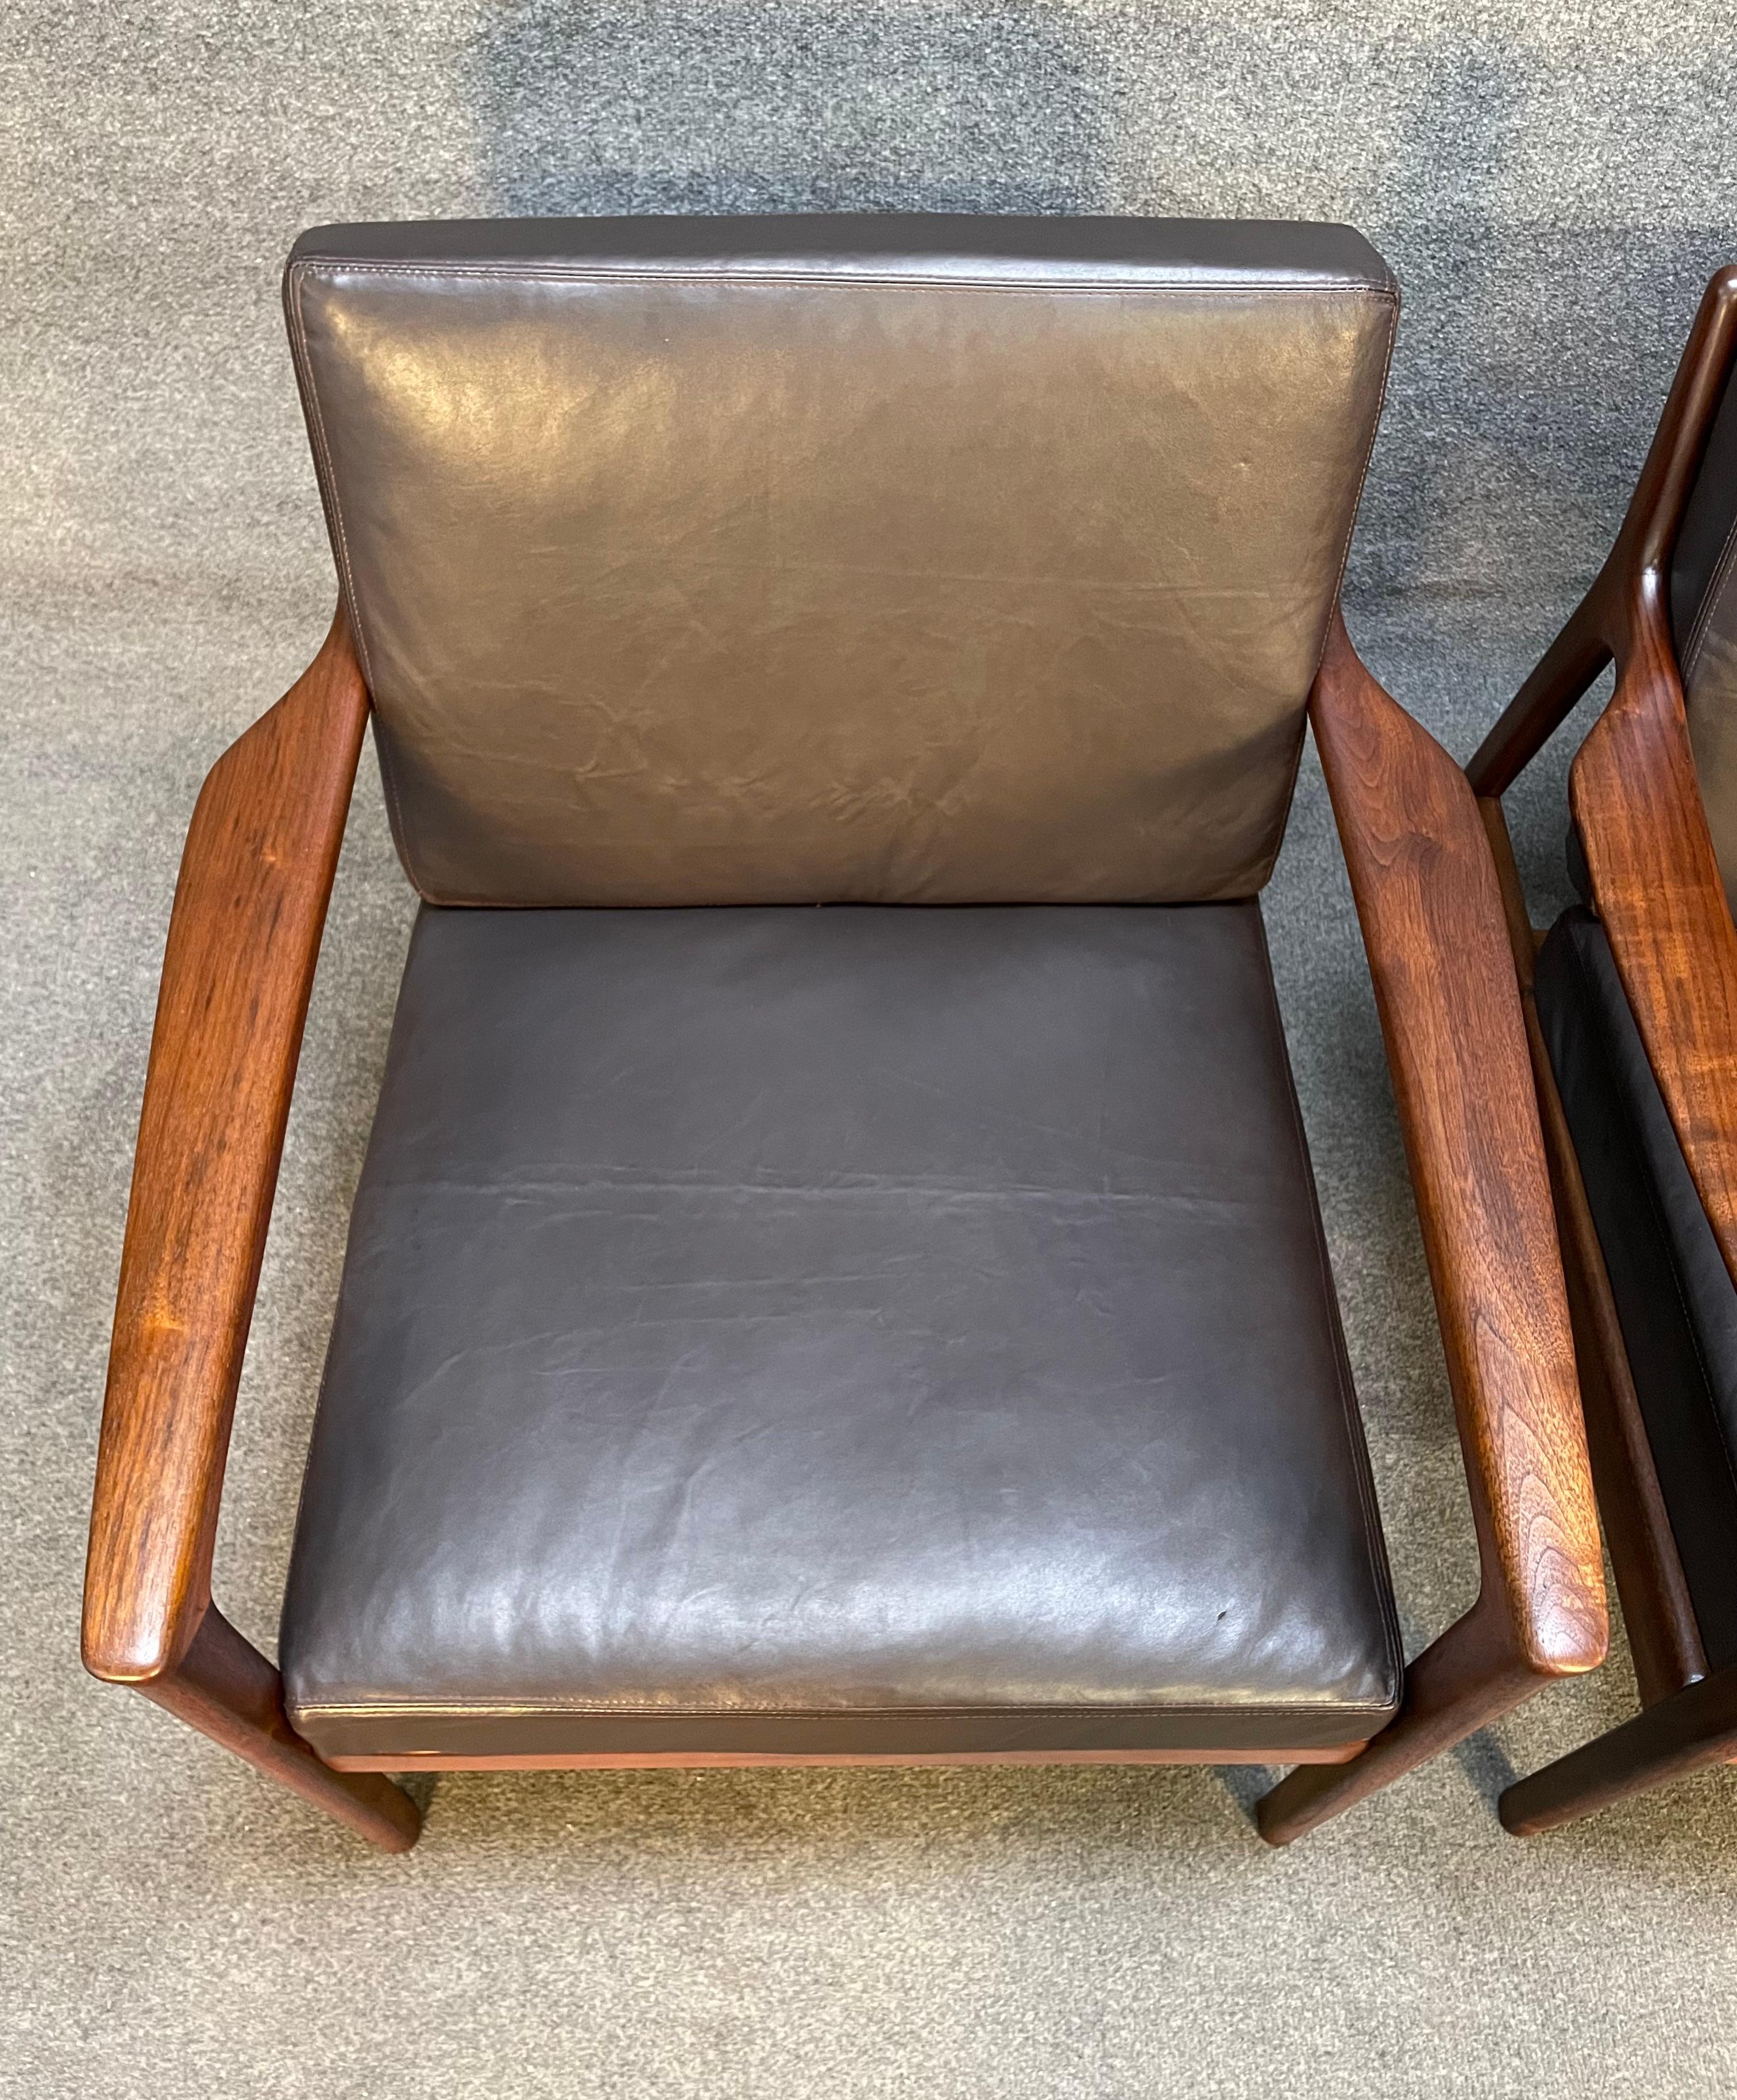 Vintage Mid-Century Modern Walnut DUX Lounge Chairs 